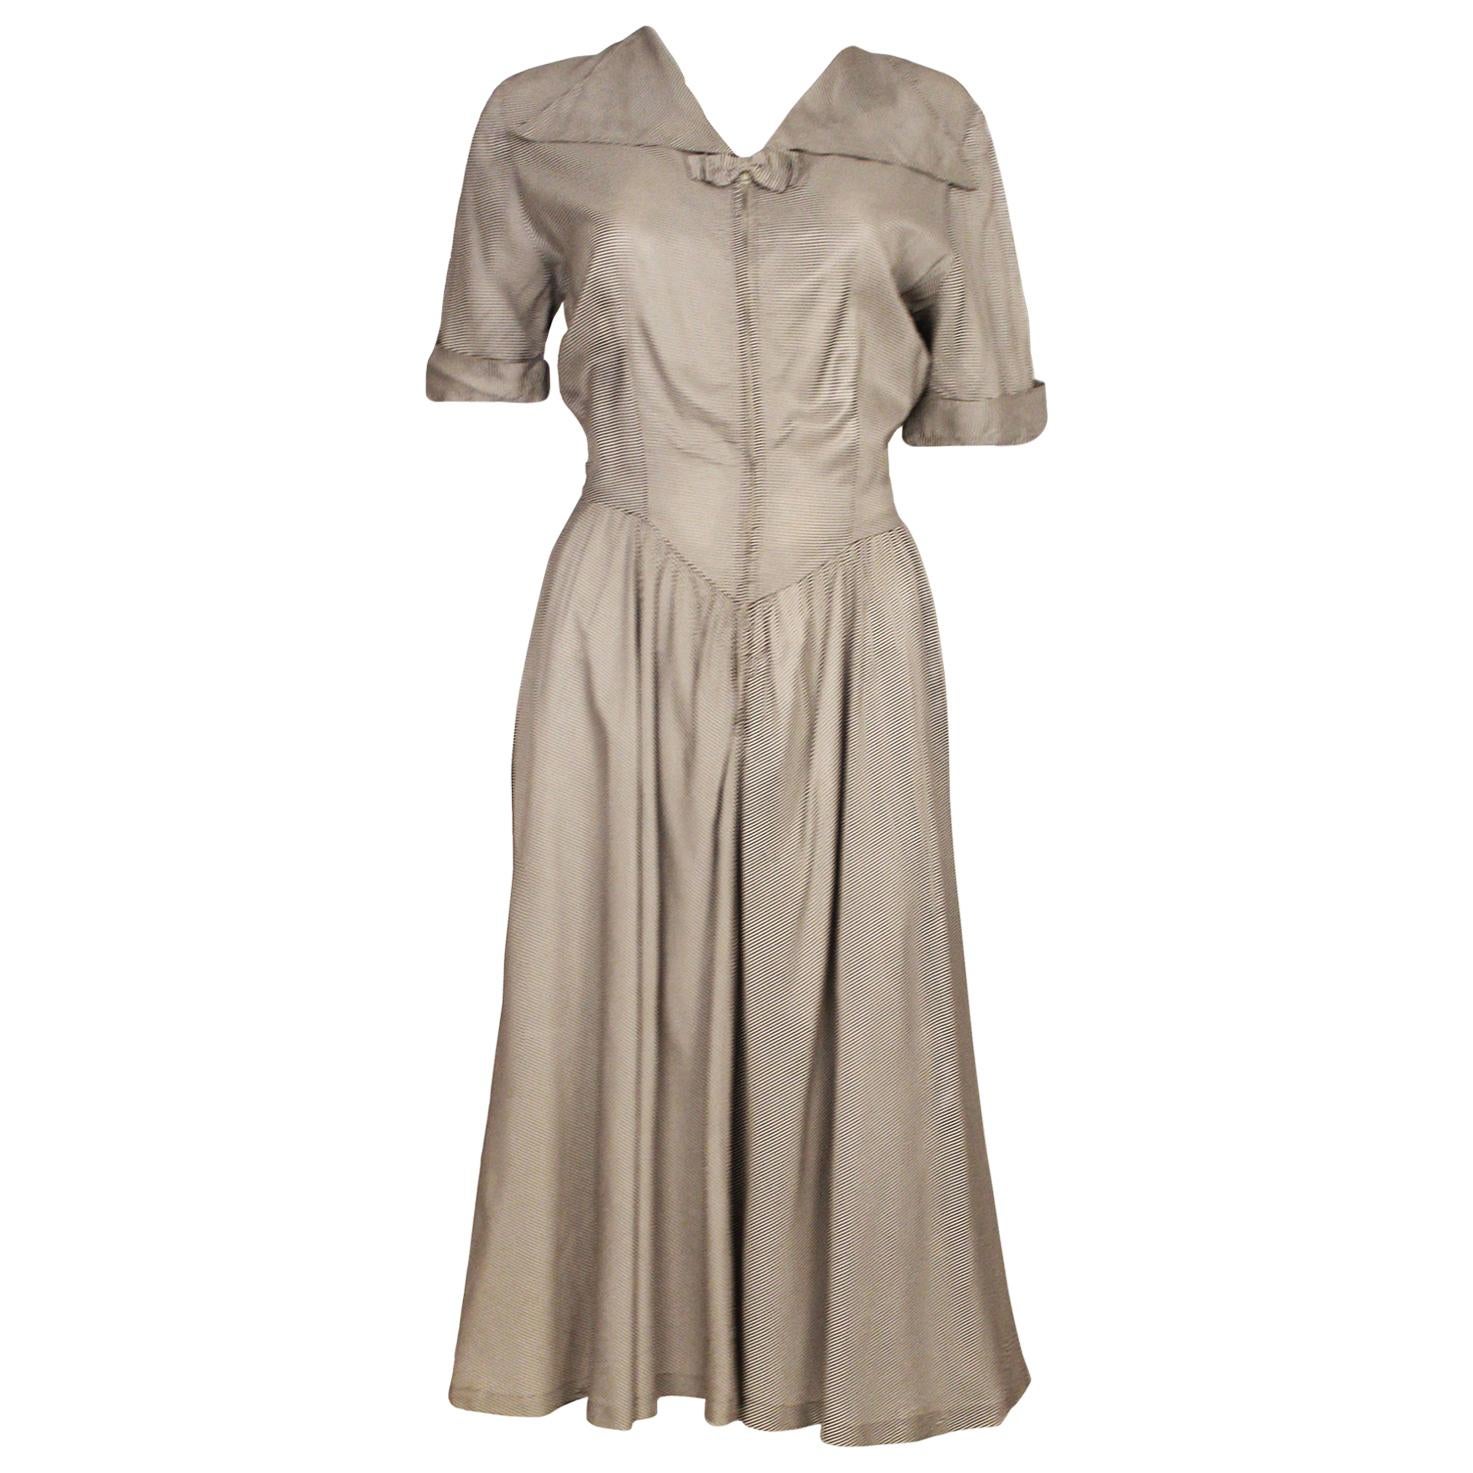  Vintage 1940s Black & White Stripe Tea Dress For Sale